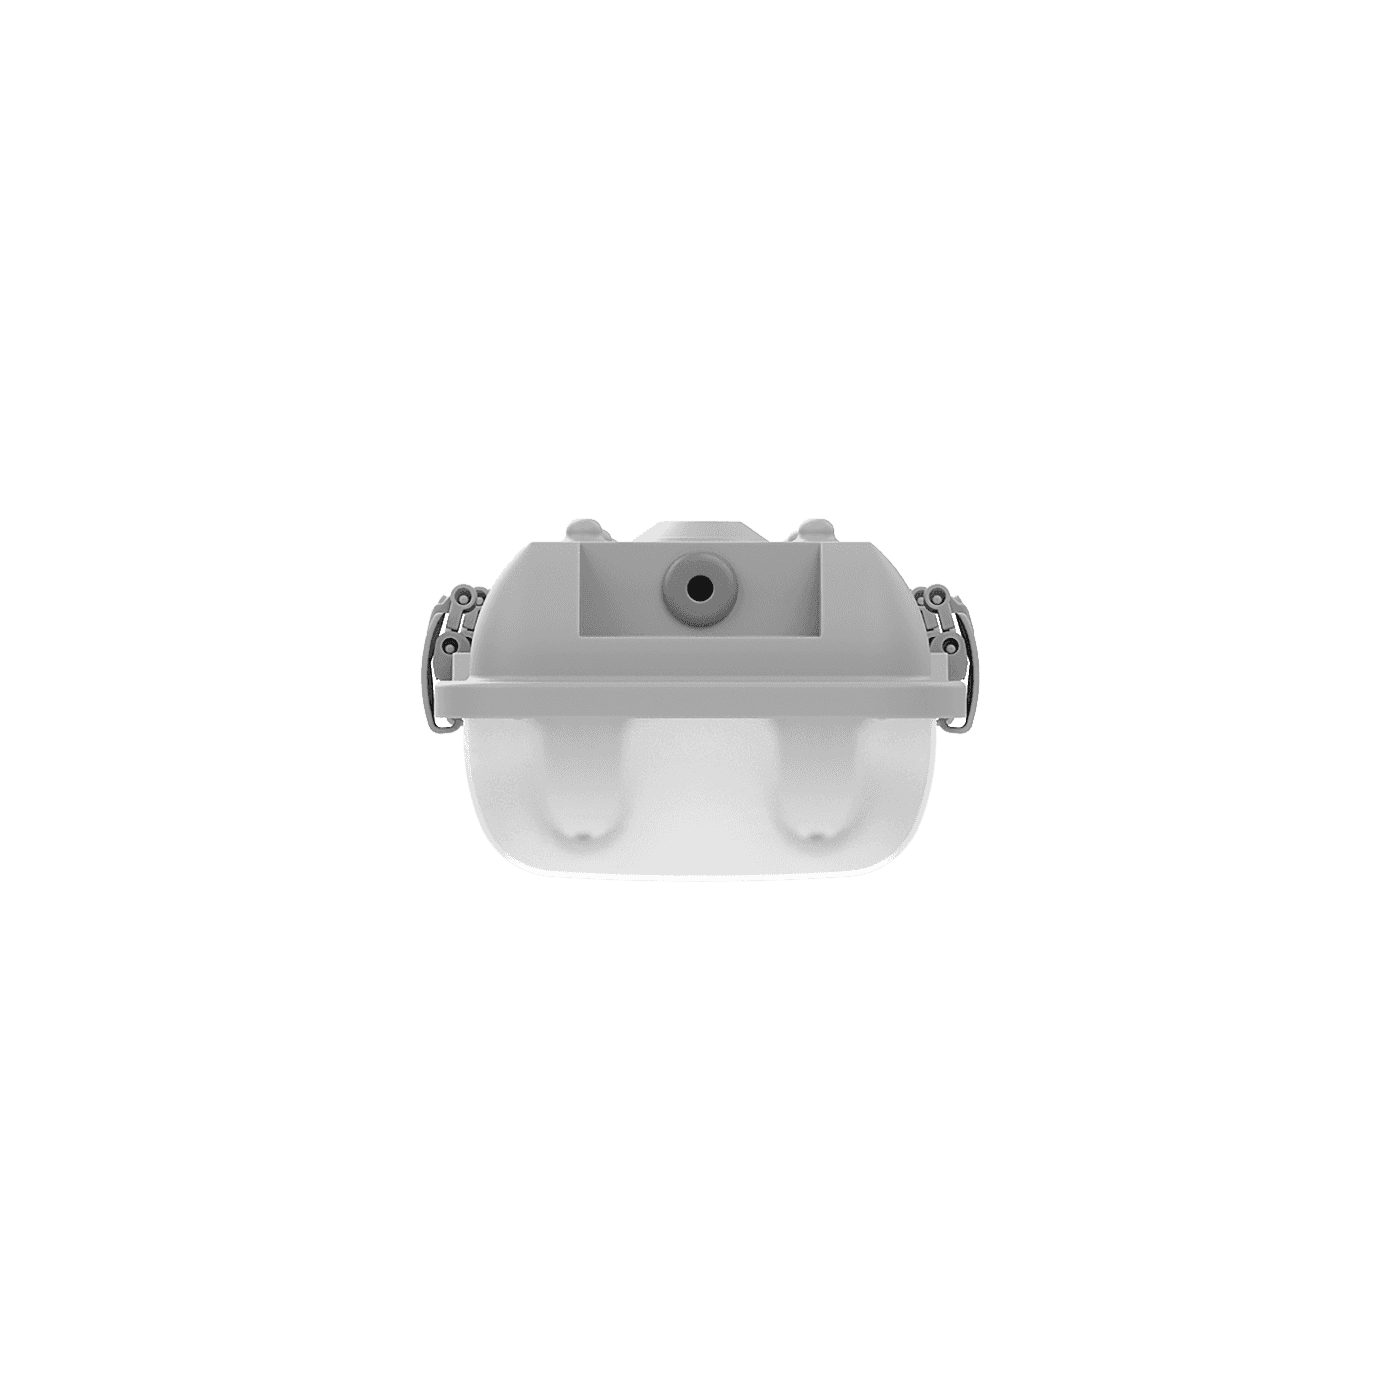 ламповые ARCTIC 254 (SAN/SMC) HF, артикул 1069002610